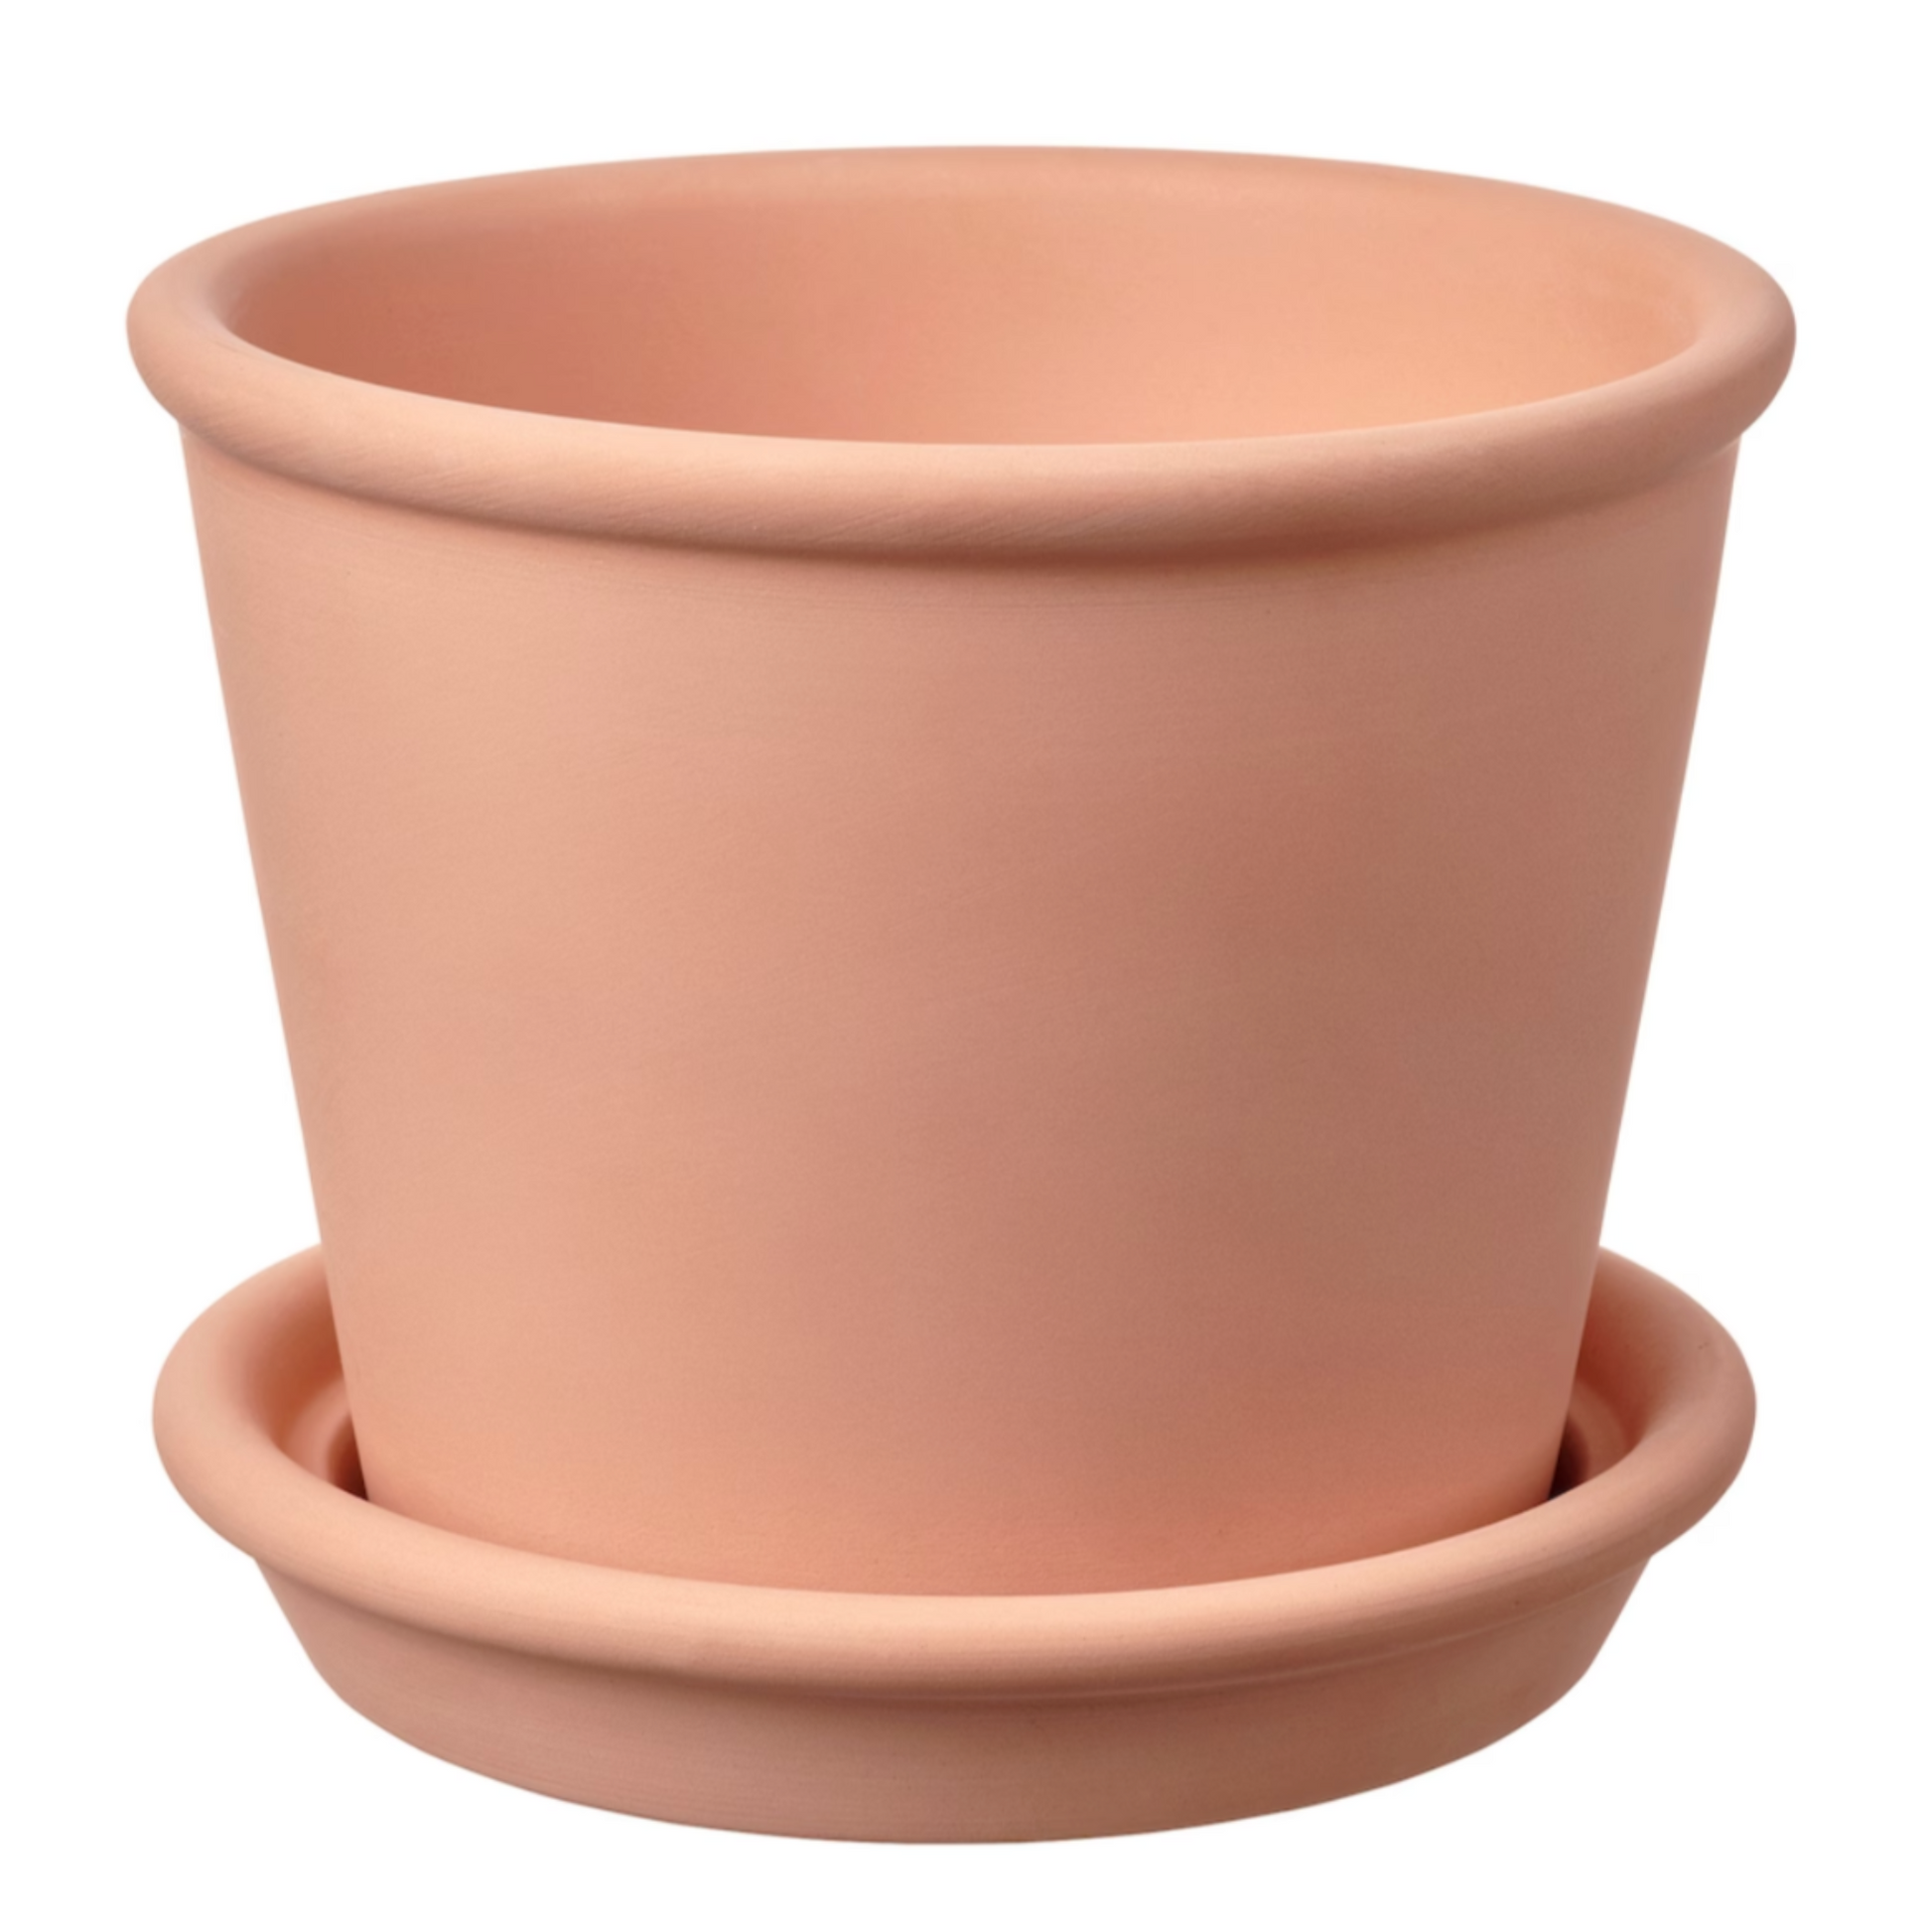 Ikea Muskotblomma Clay Pot with Plate, 12cm (8559111045407)